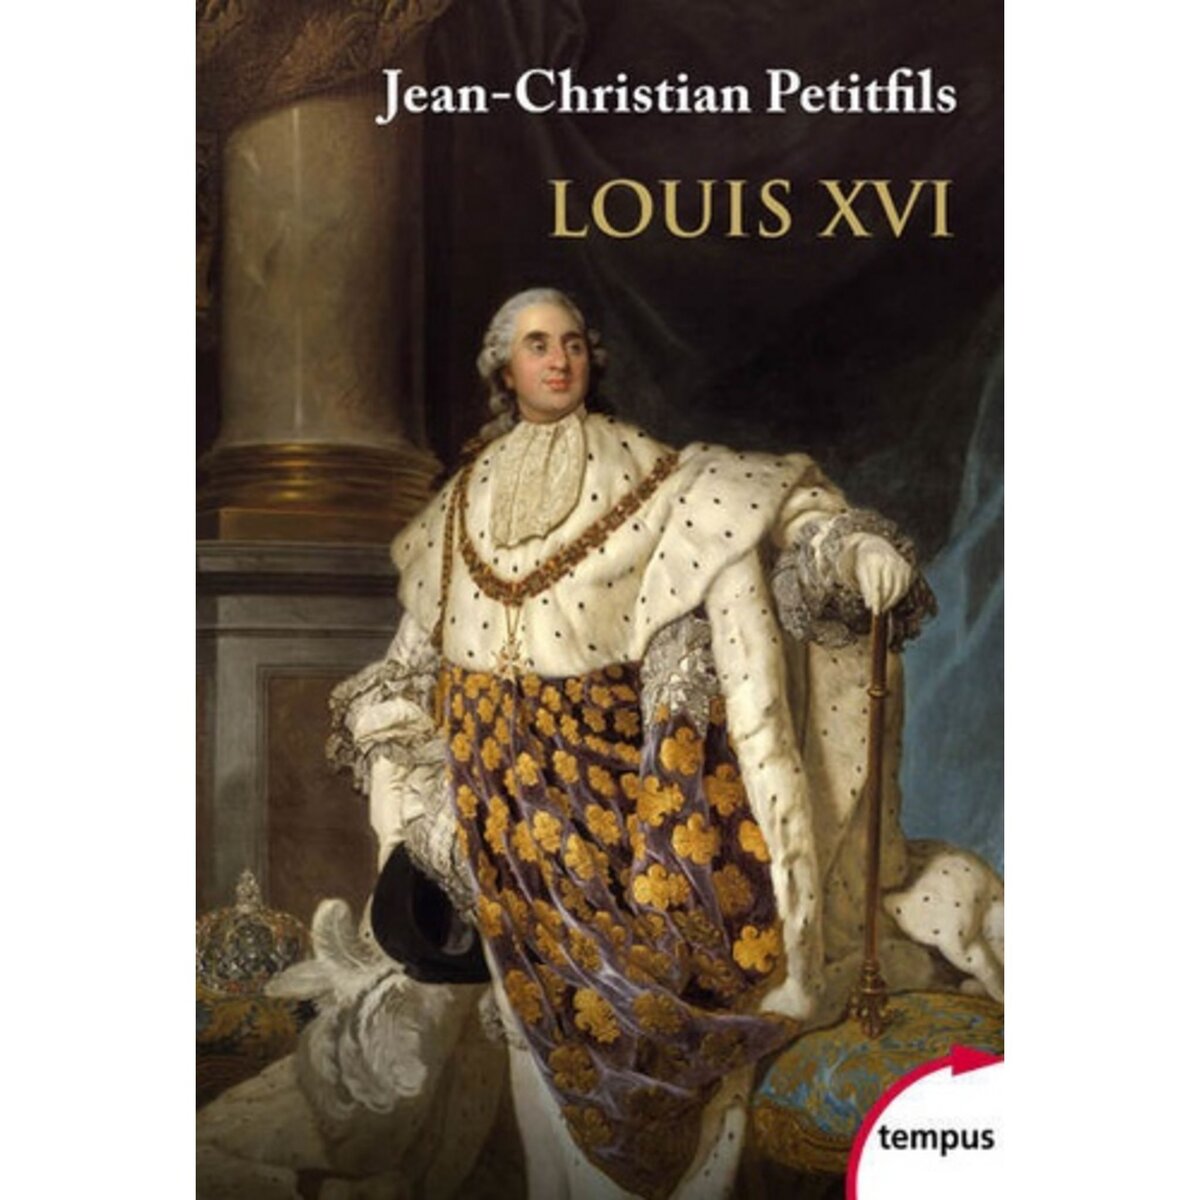  LOUIS XVI, Petitfils Jean-Christian